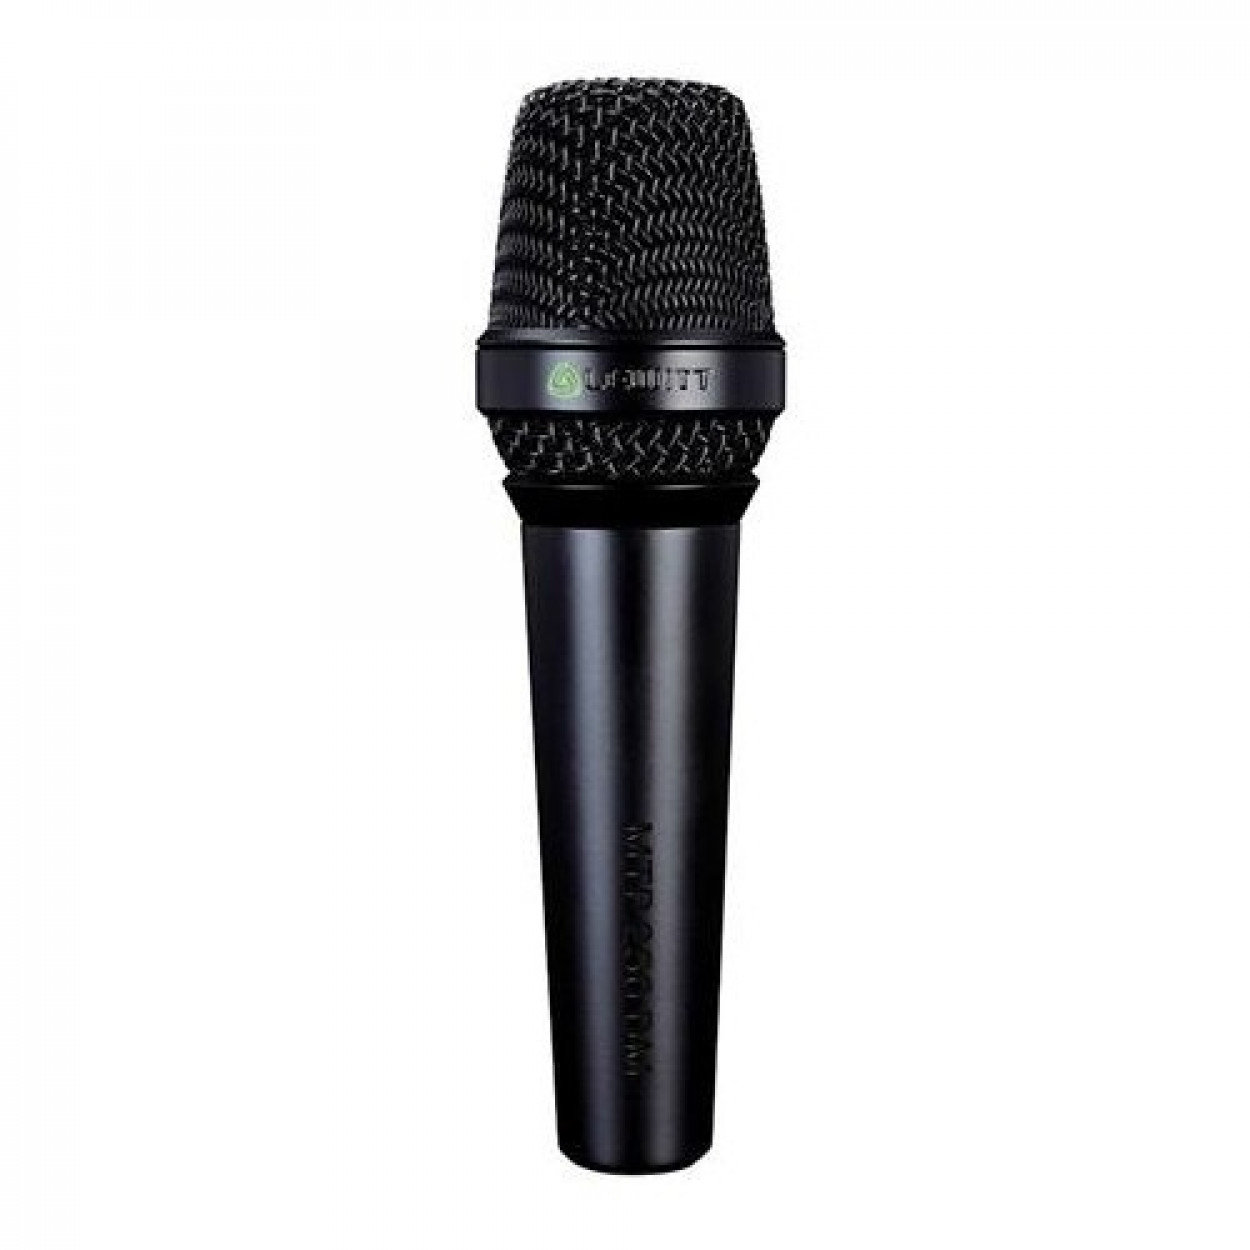 Акція на Микрофон вокальный Lewitt Mtp 250 DMs від Stylus